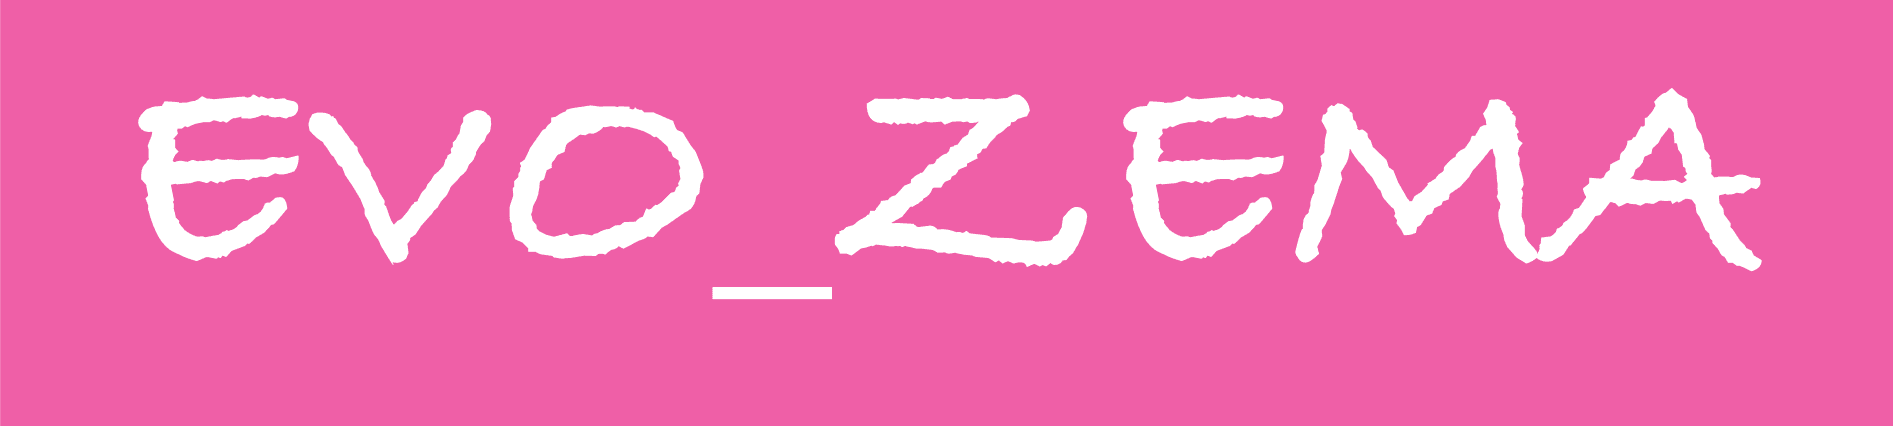 EVO_ZEMA banner